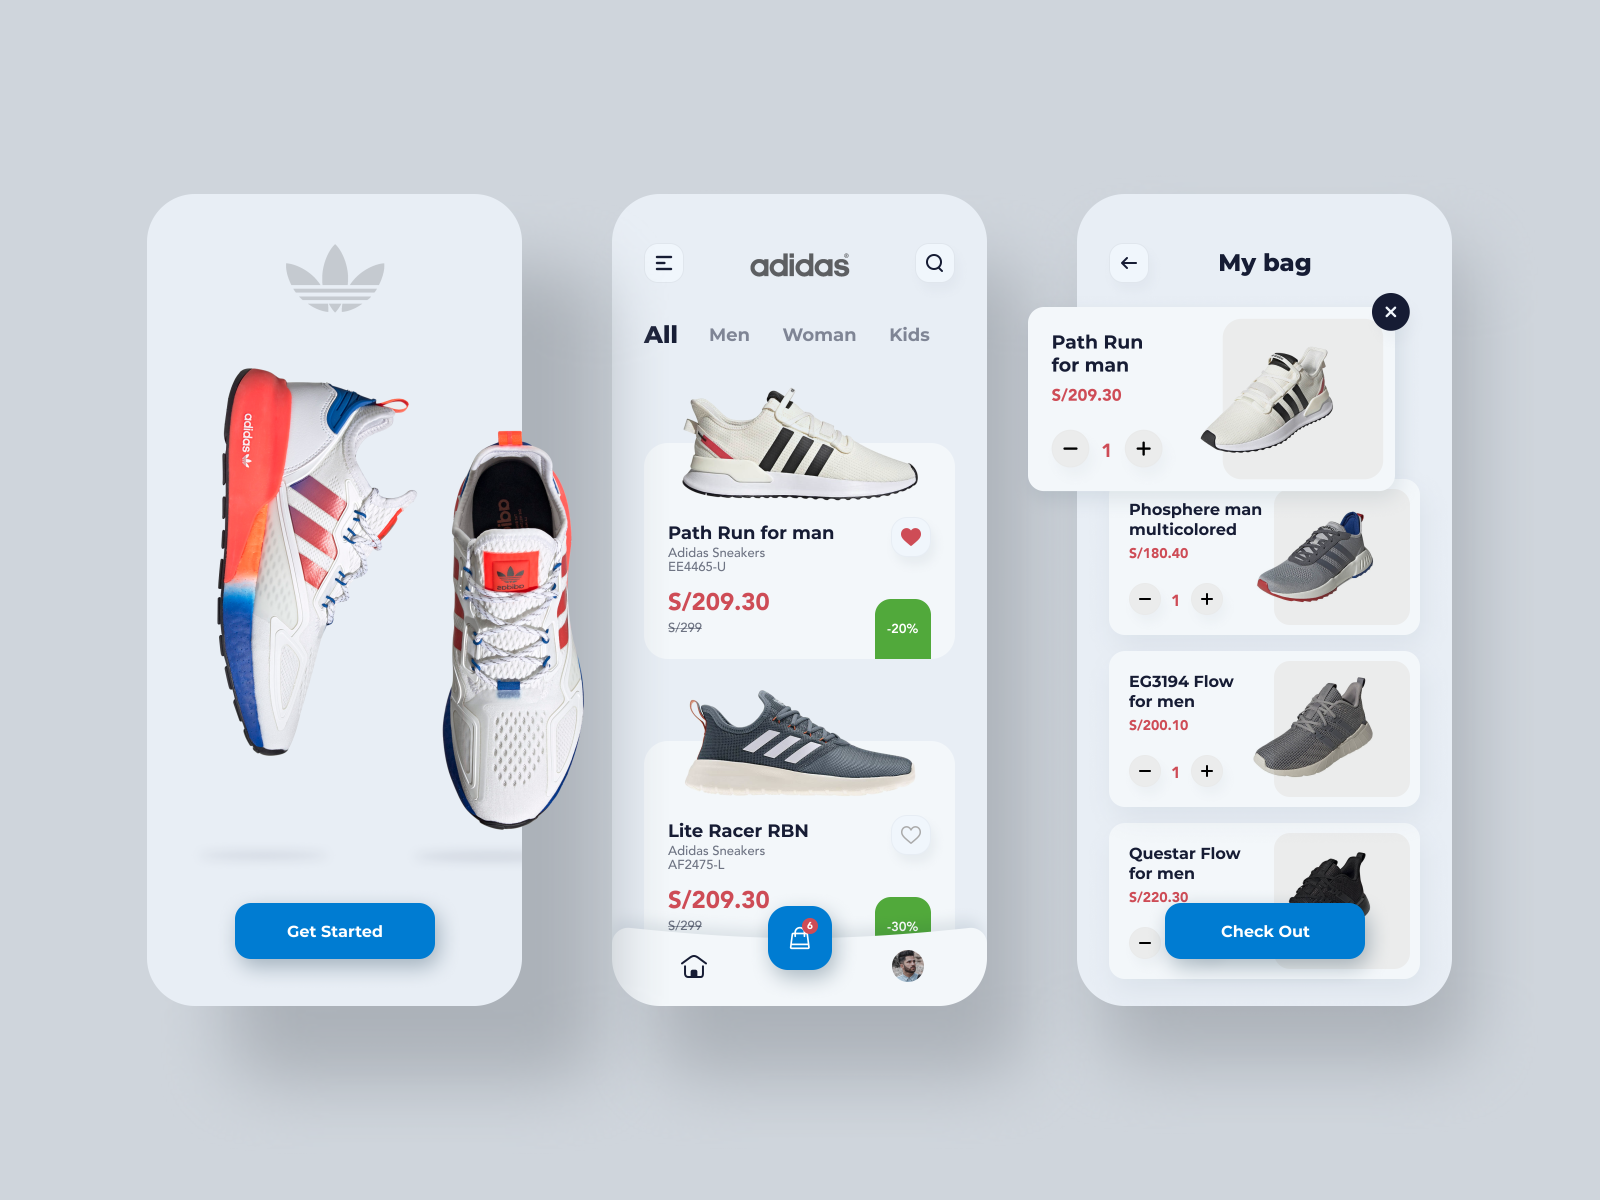 Adidas App by Christian on Dribbble